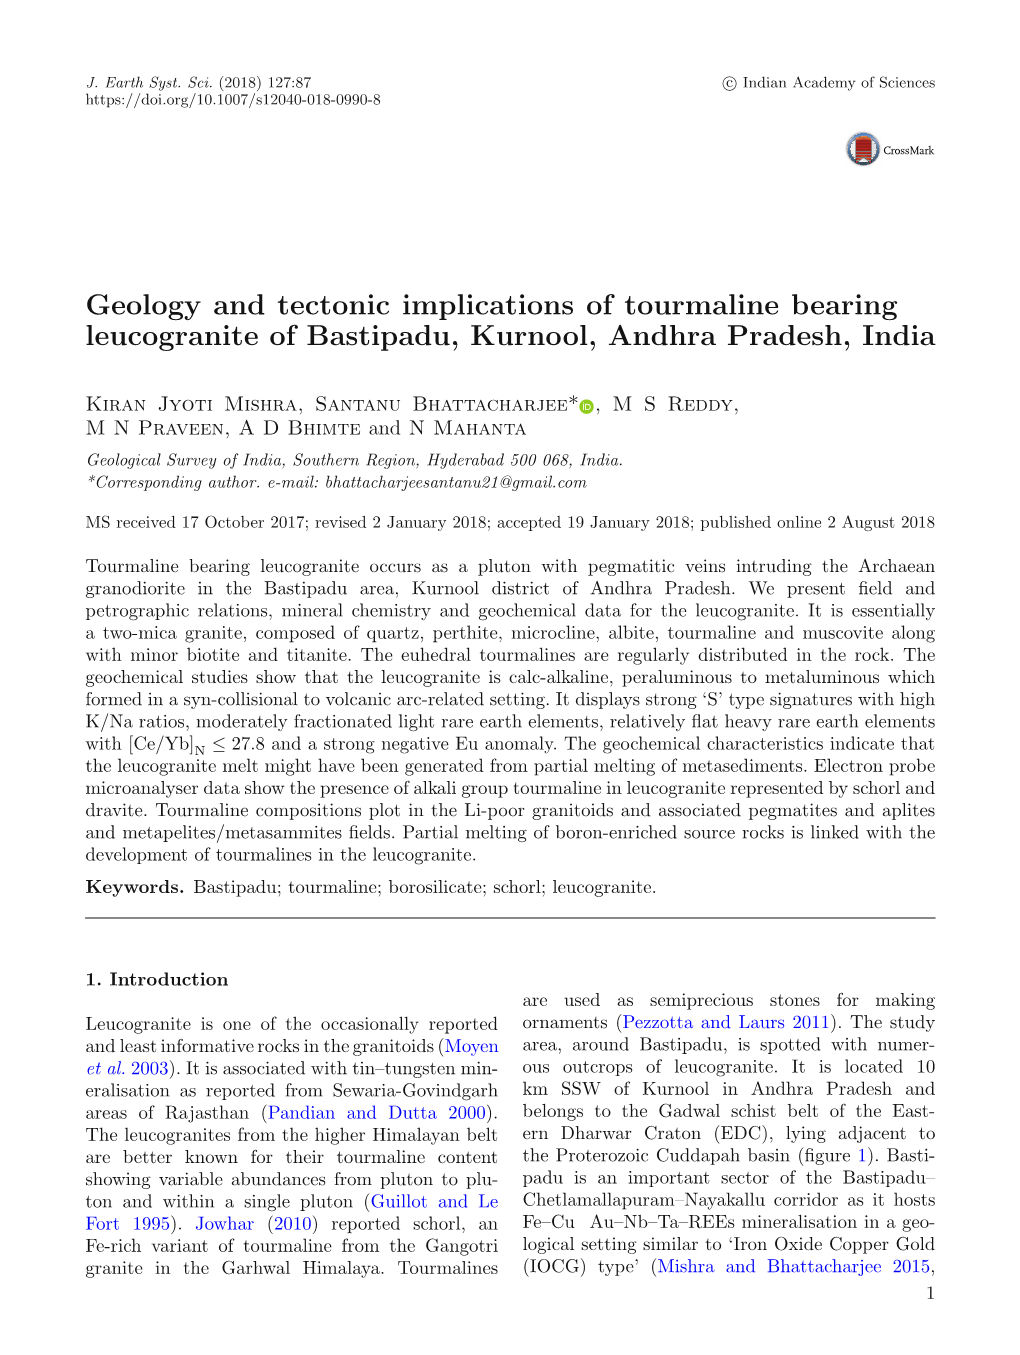 Geology and Tectonic Implications of Tourmaline Bearing Leucogranite of Bastipadu, Kurnool, Andhra Pradesh, India